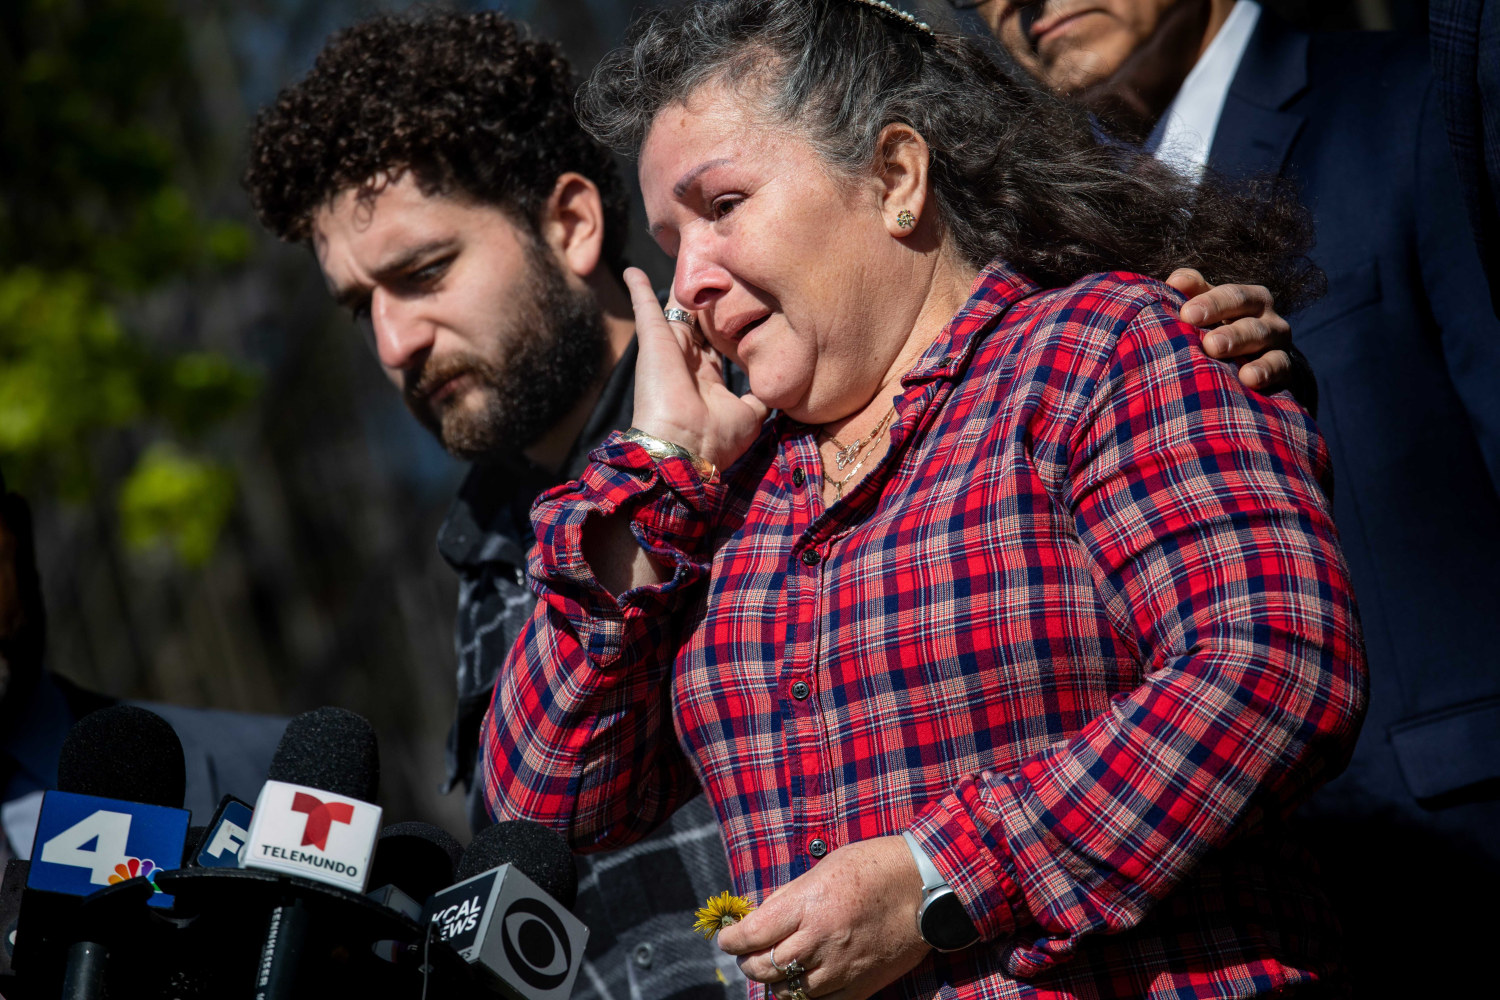 Mother of teen killed in California neighborhood: “They took my